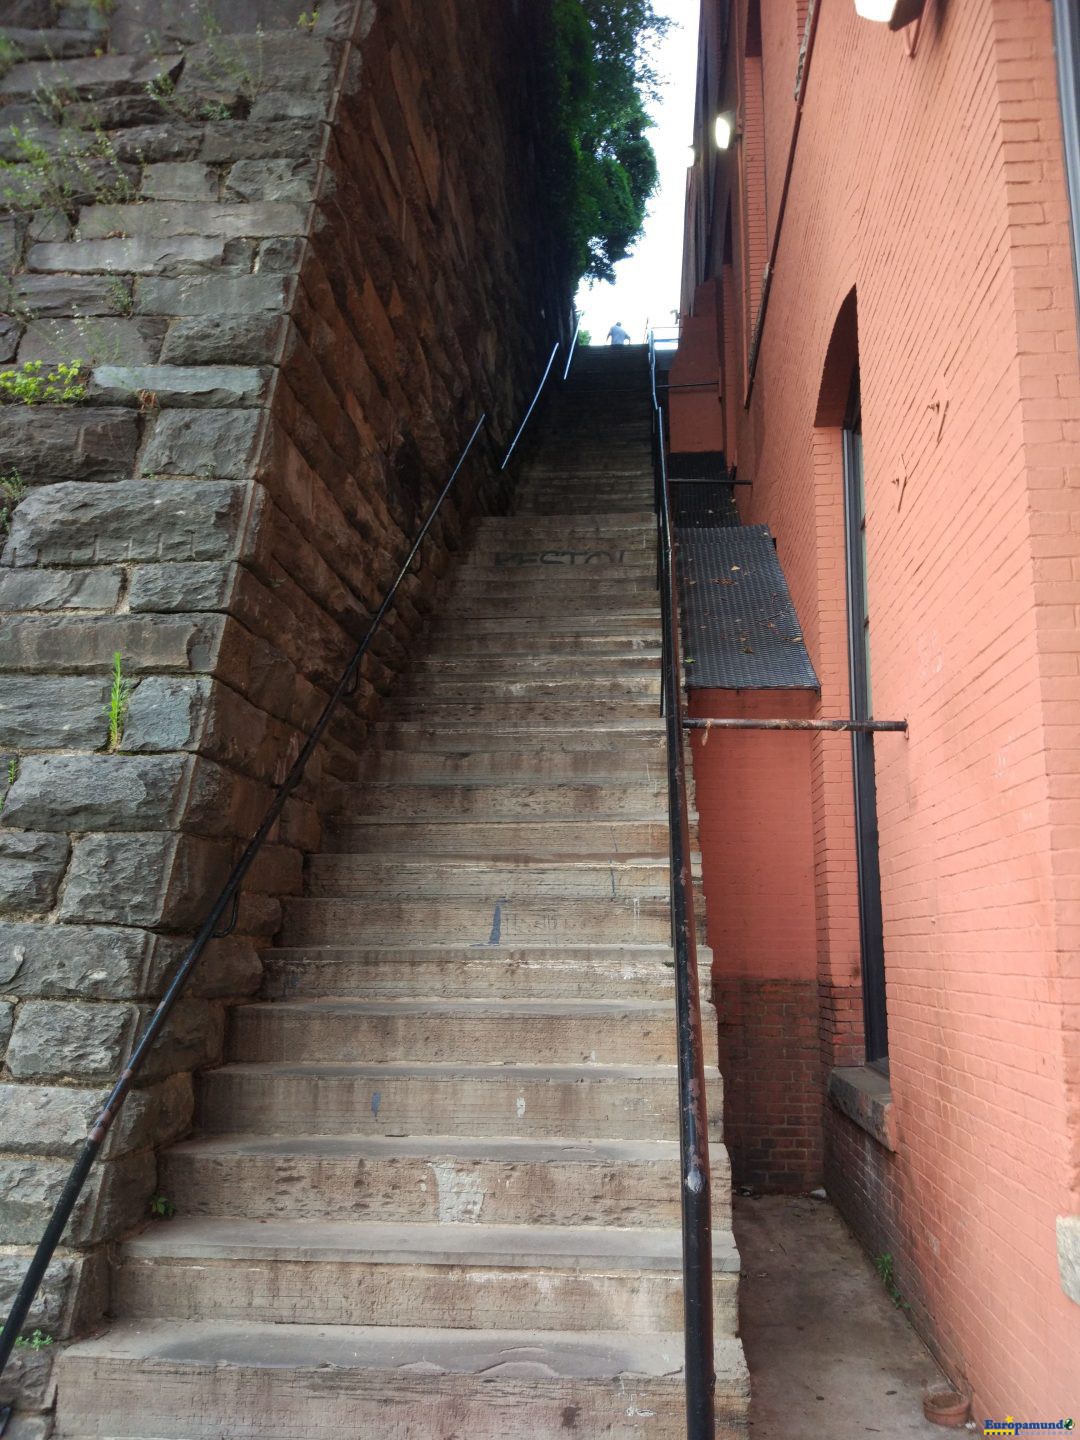 Escalera pelicula del exorcista Georgetown